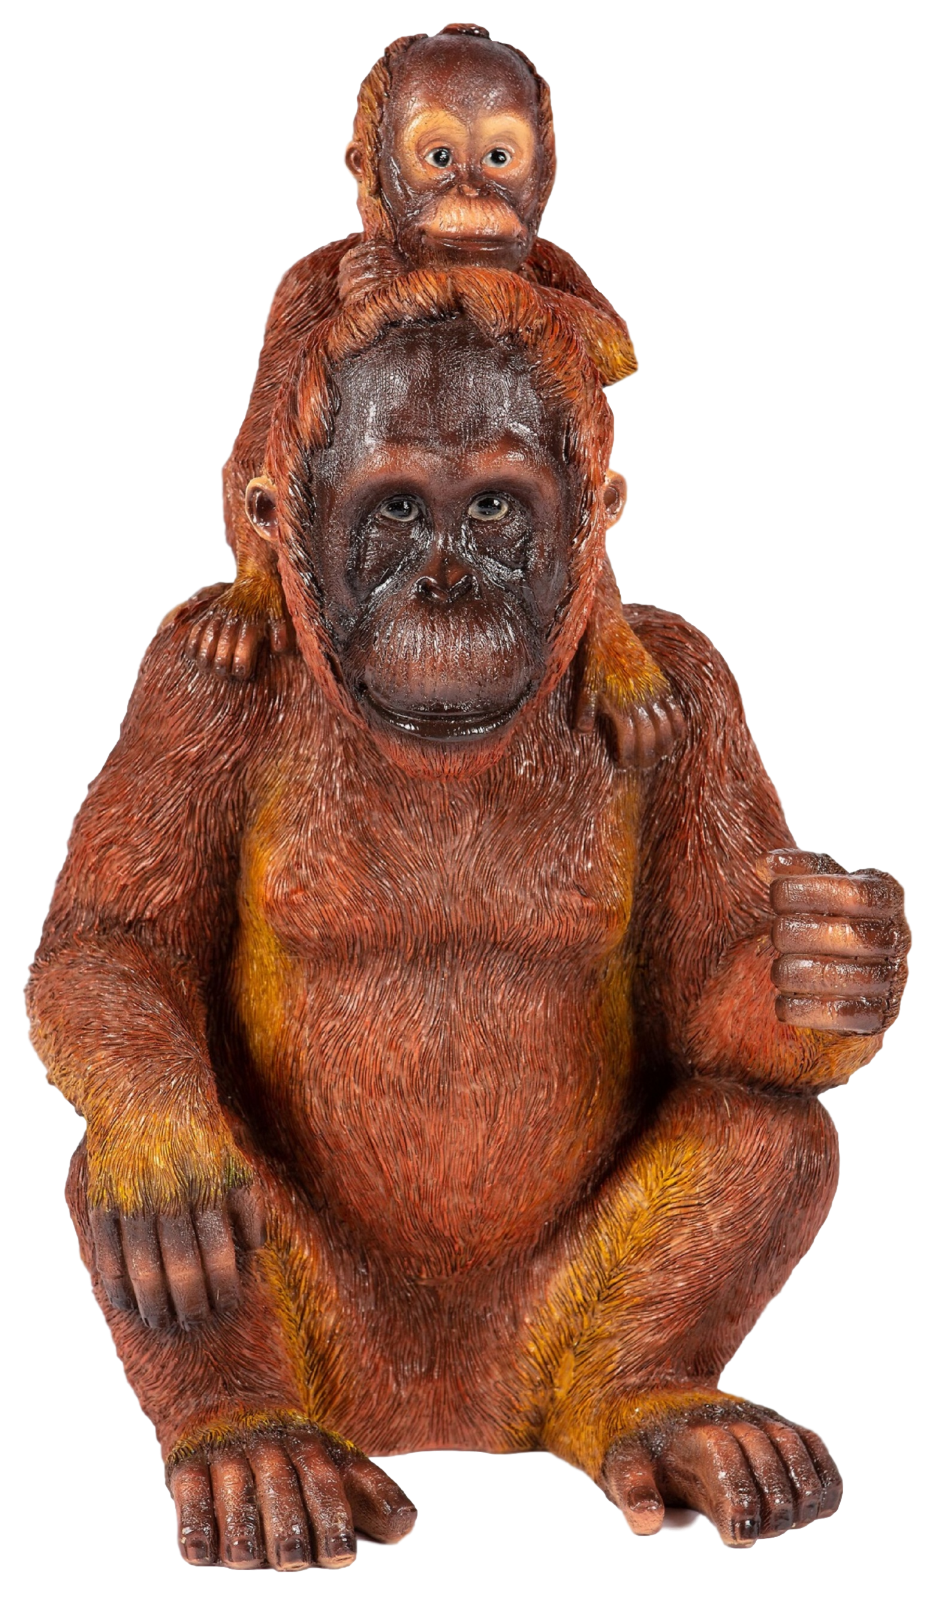 Orangutan &amp; Baby Ornament Resin Garden Figurine Home Decor Statue Jungle Theme